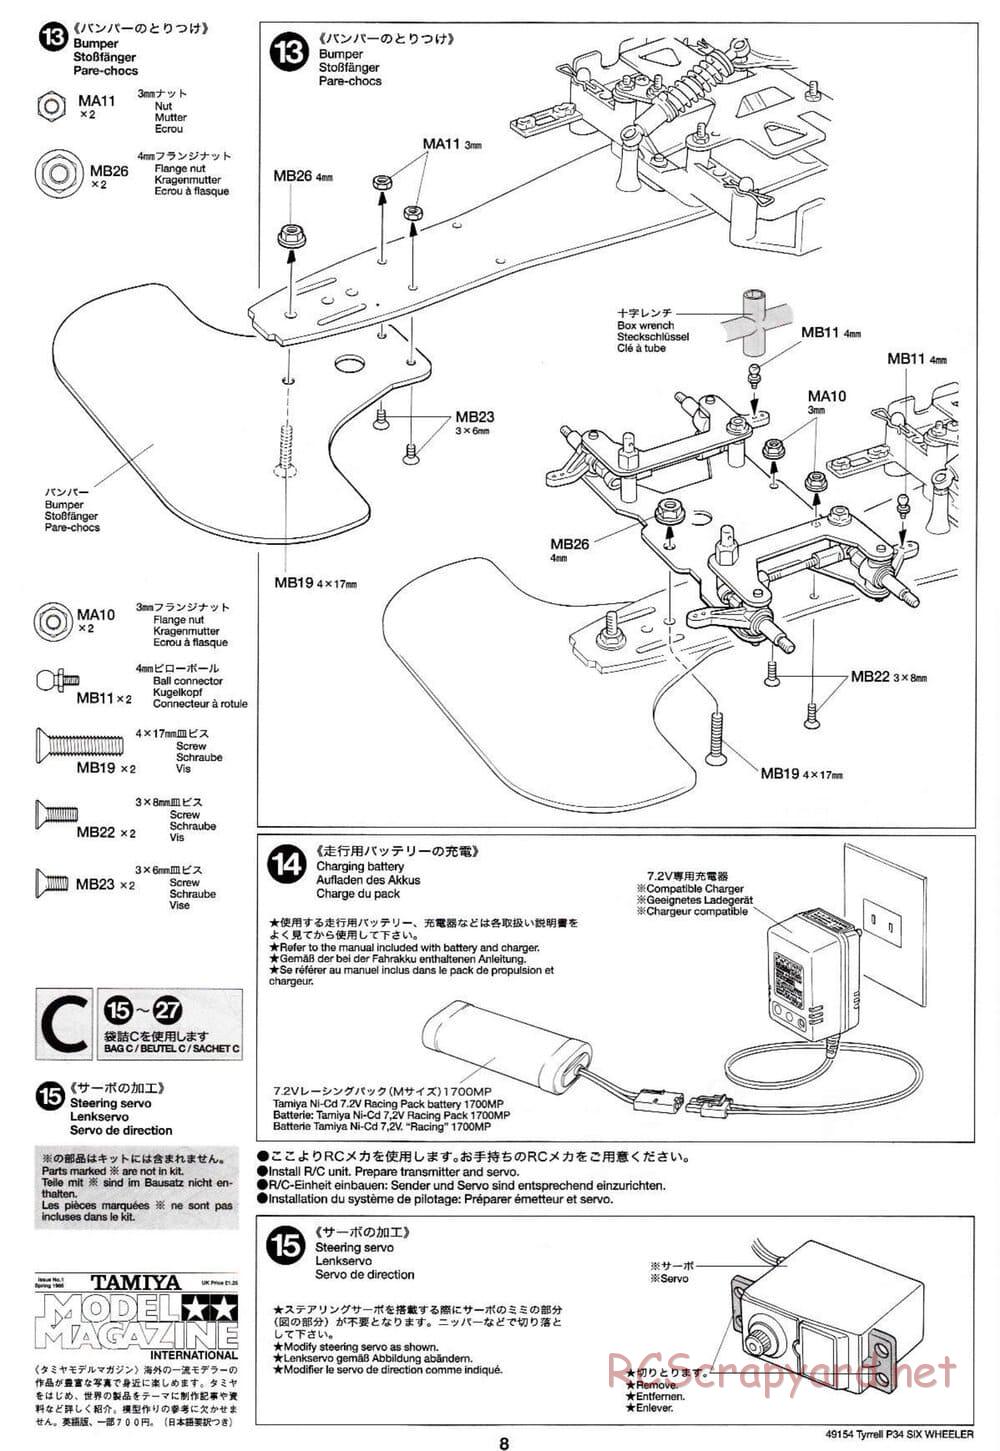 Tamiya - Tyrrell P34 Six Wheeler - F103-6W Chassis - Manual - Page 8